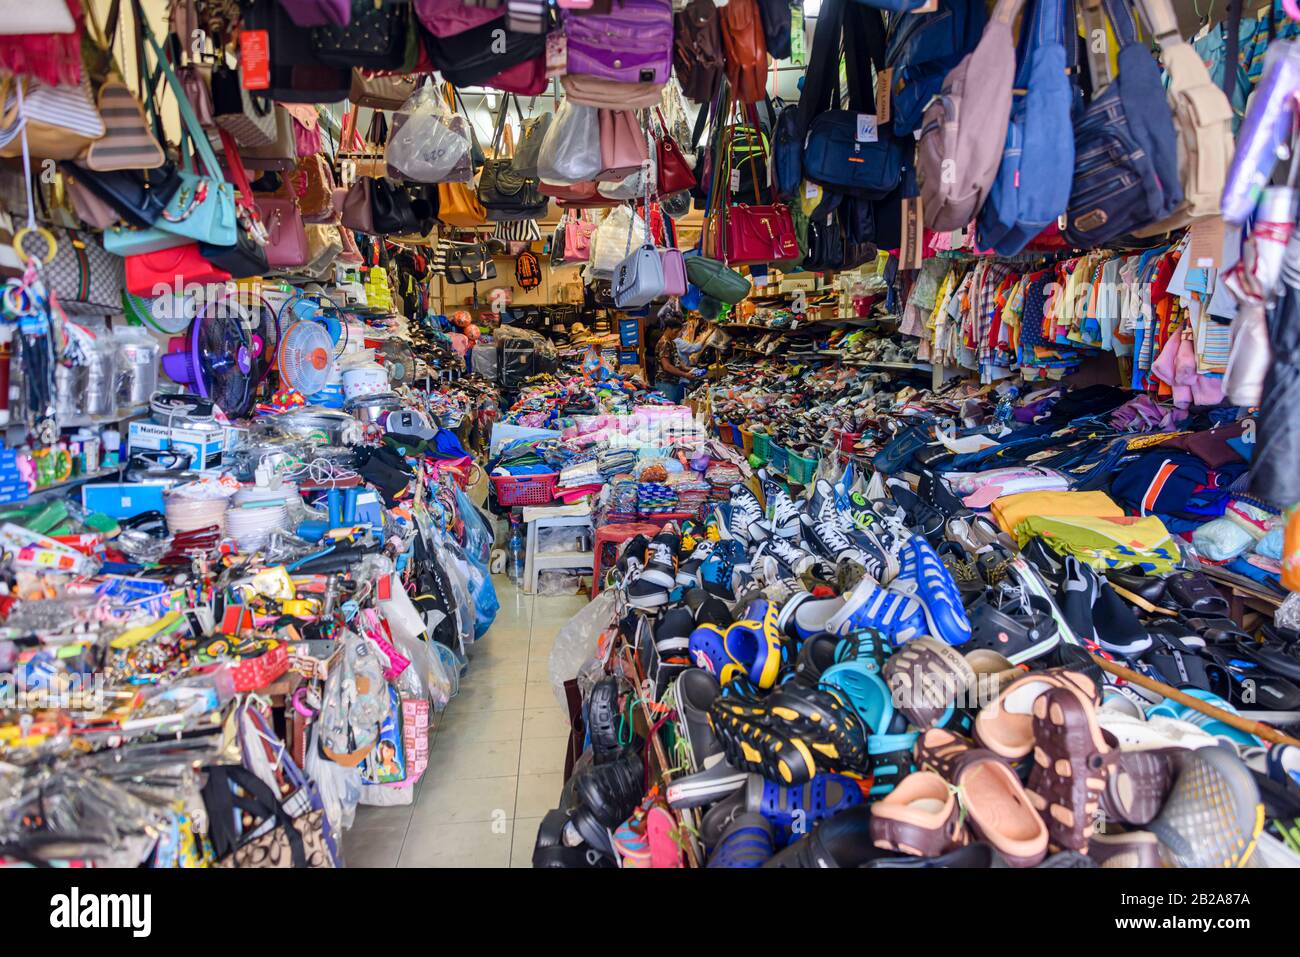 Very messy shoe and bag shop, Phuket, Thailand Stock Photo